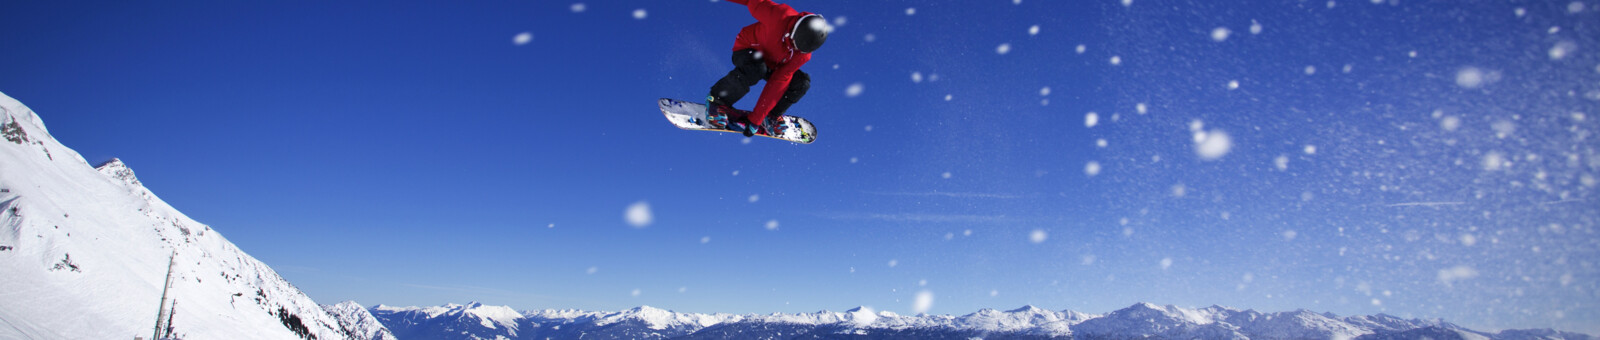     Snowboarding in a funpark near Innsbruck 